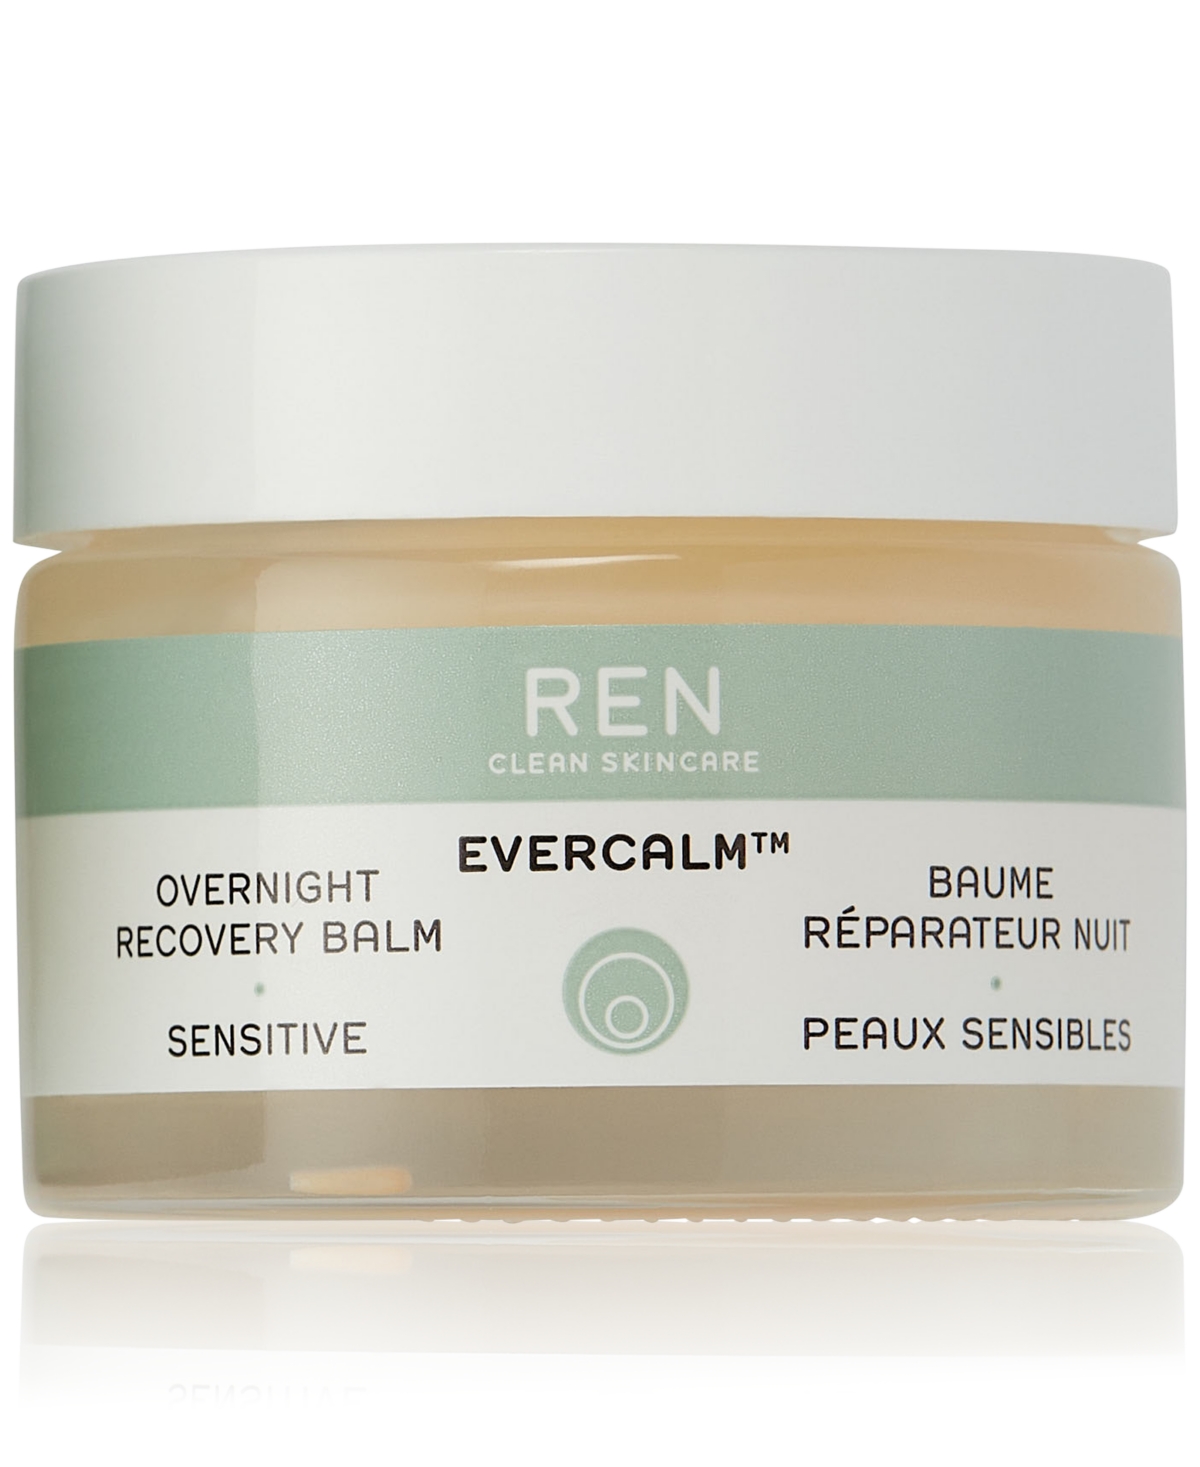 Ren Clean Skincare Evercalm Overnight Recovery Balm Supersize, 1.7 Oz.